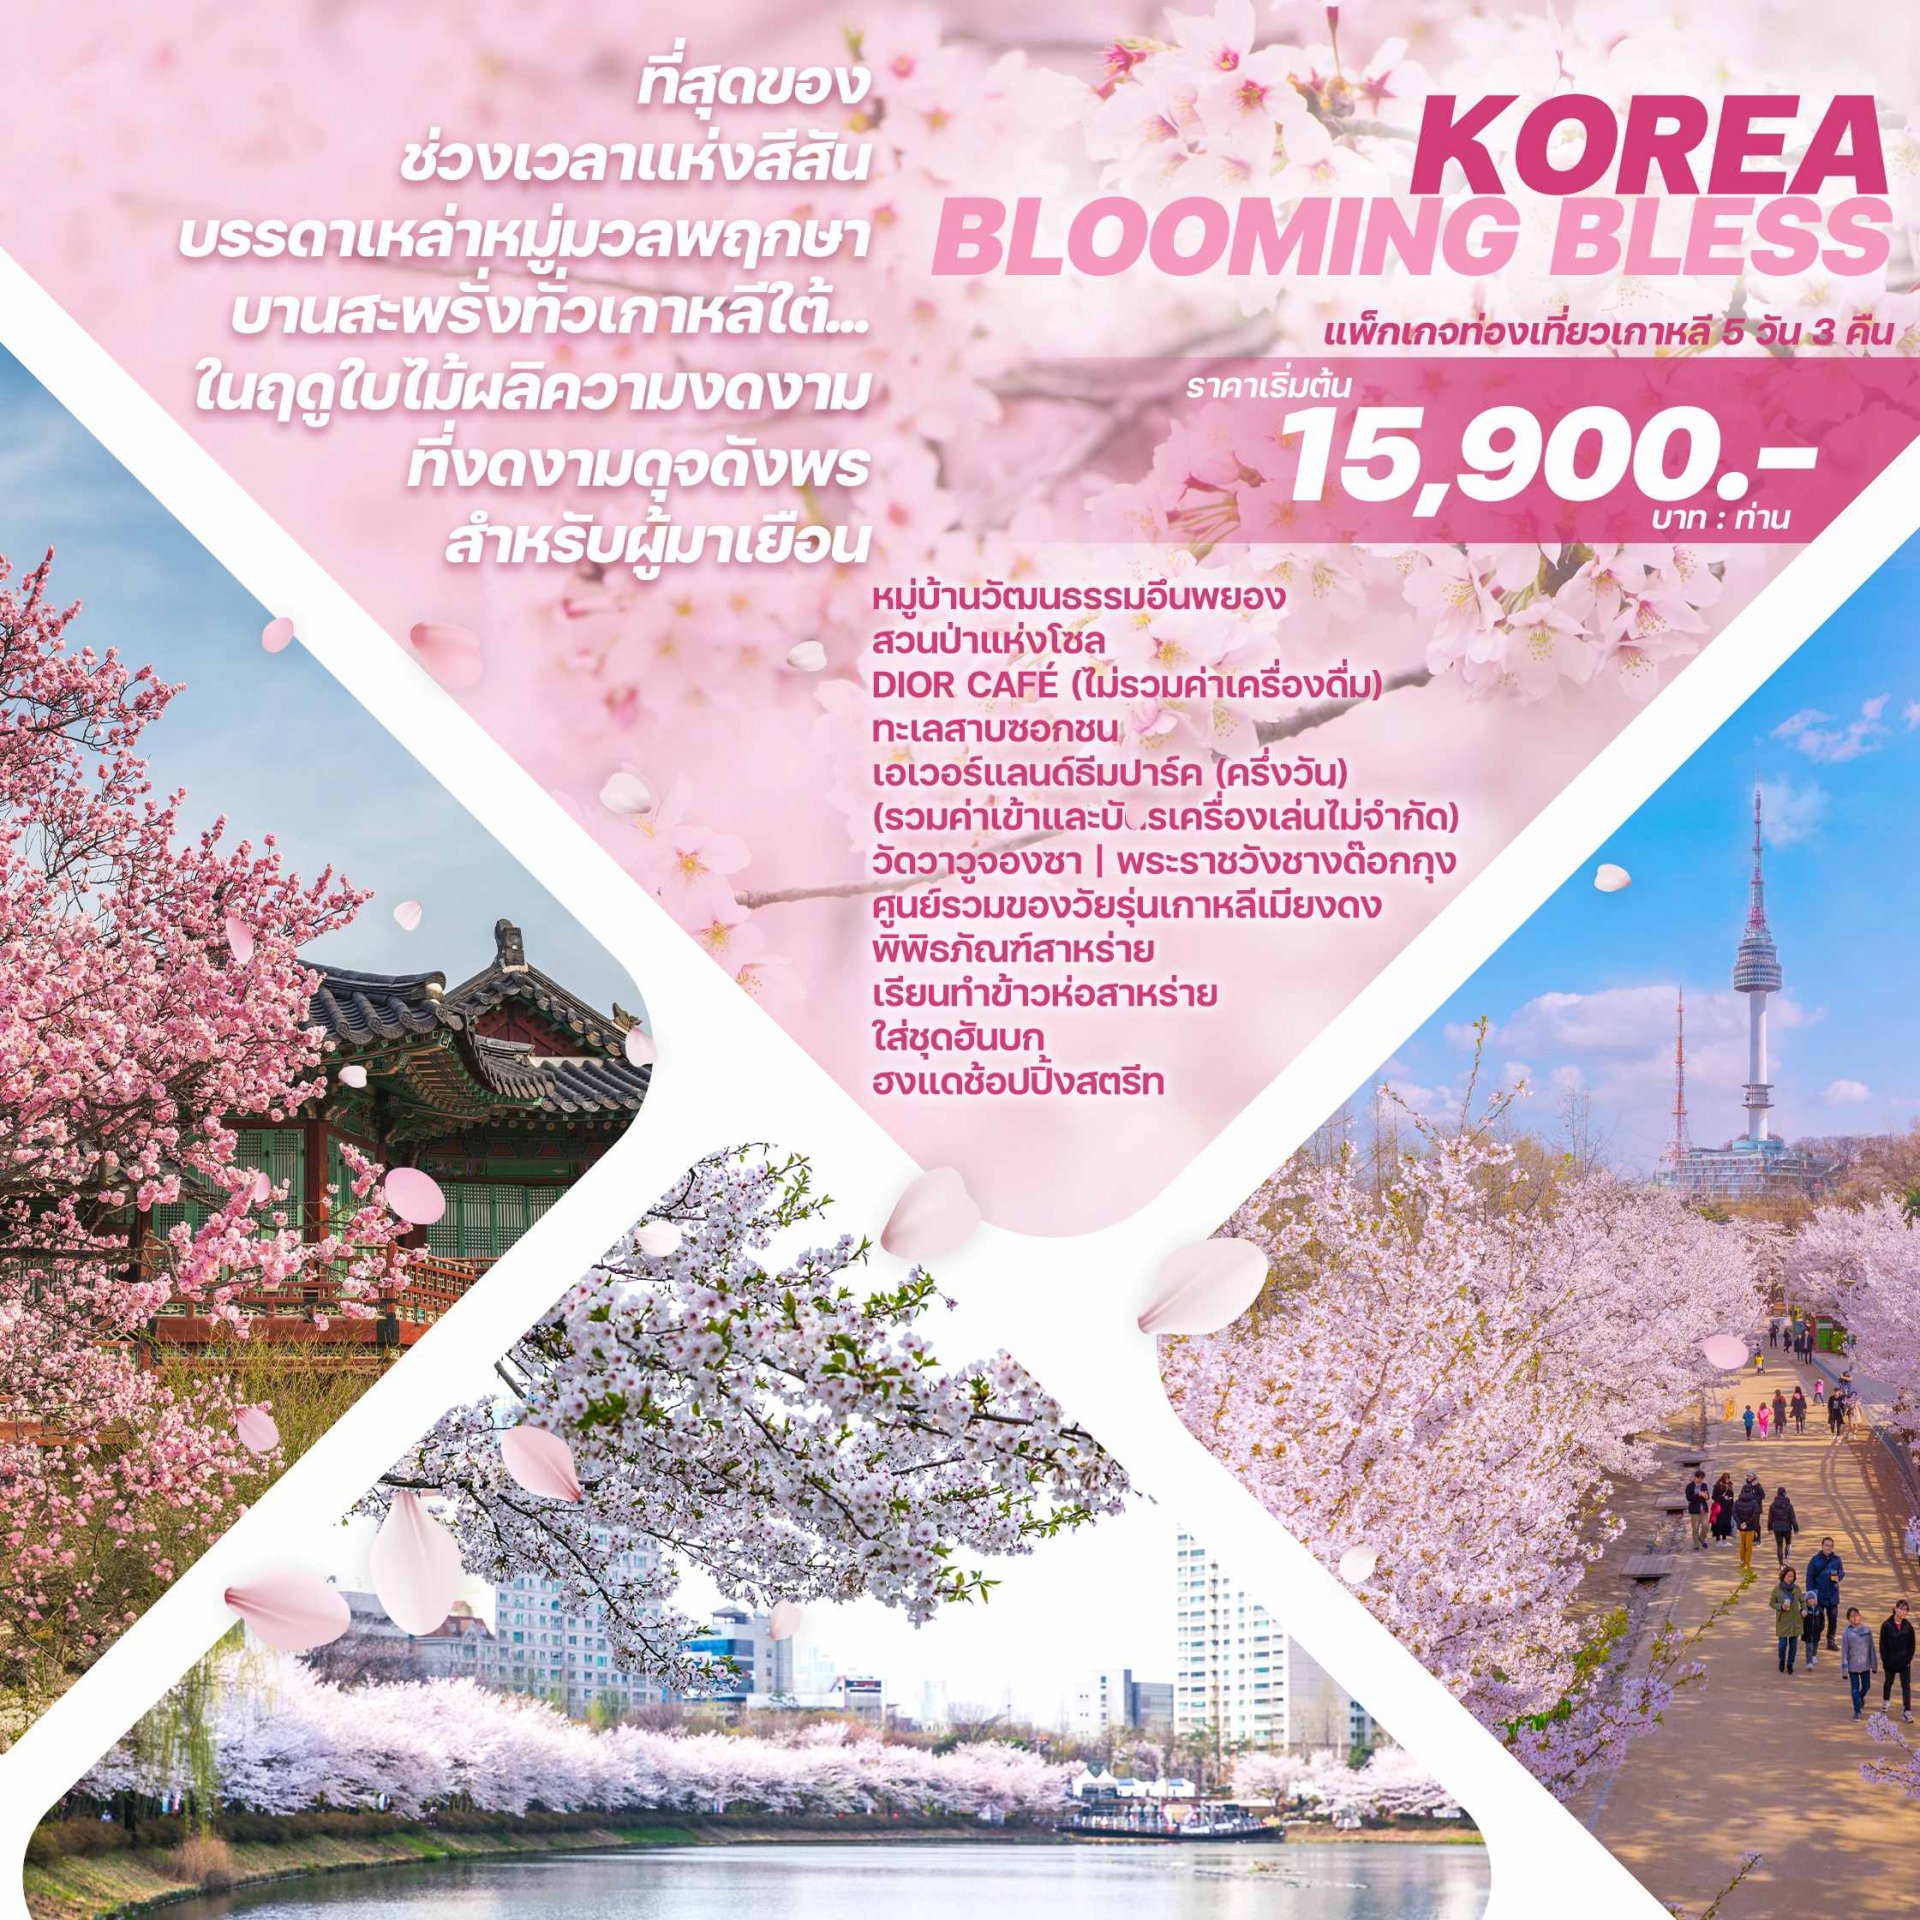 BWE-KOREA BLOOMING BLESS